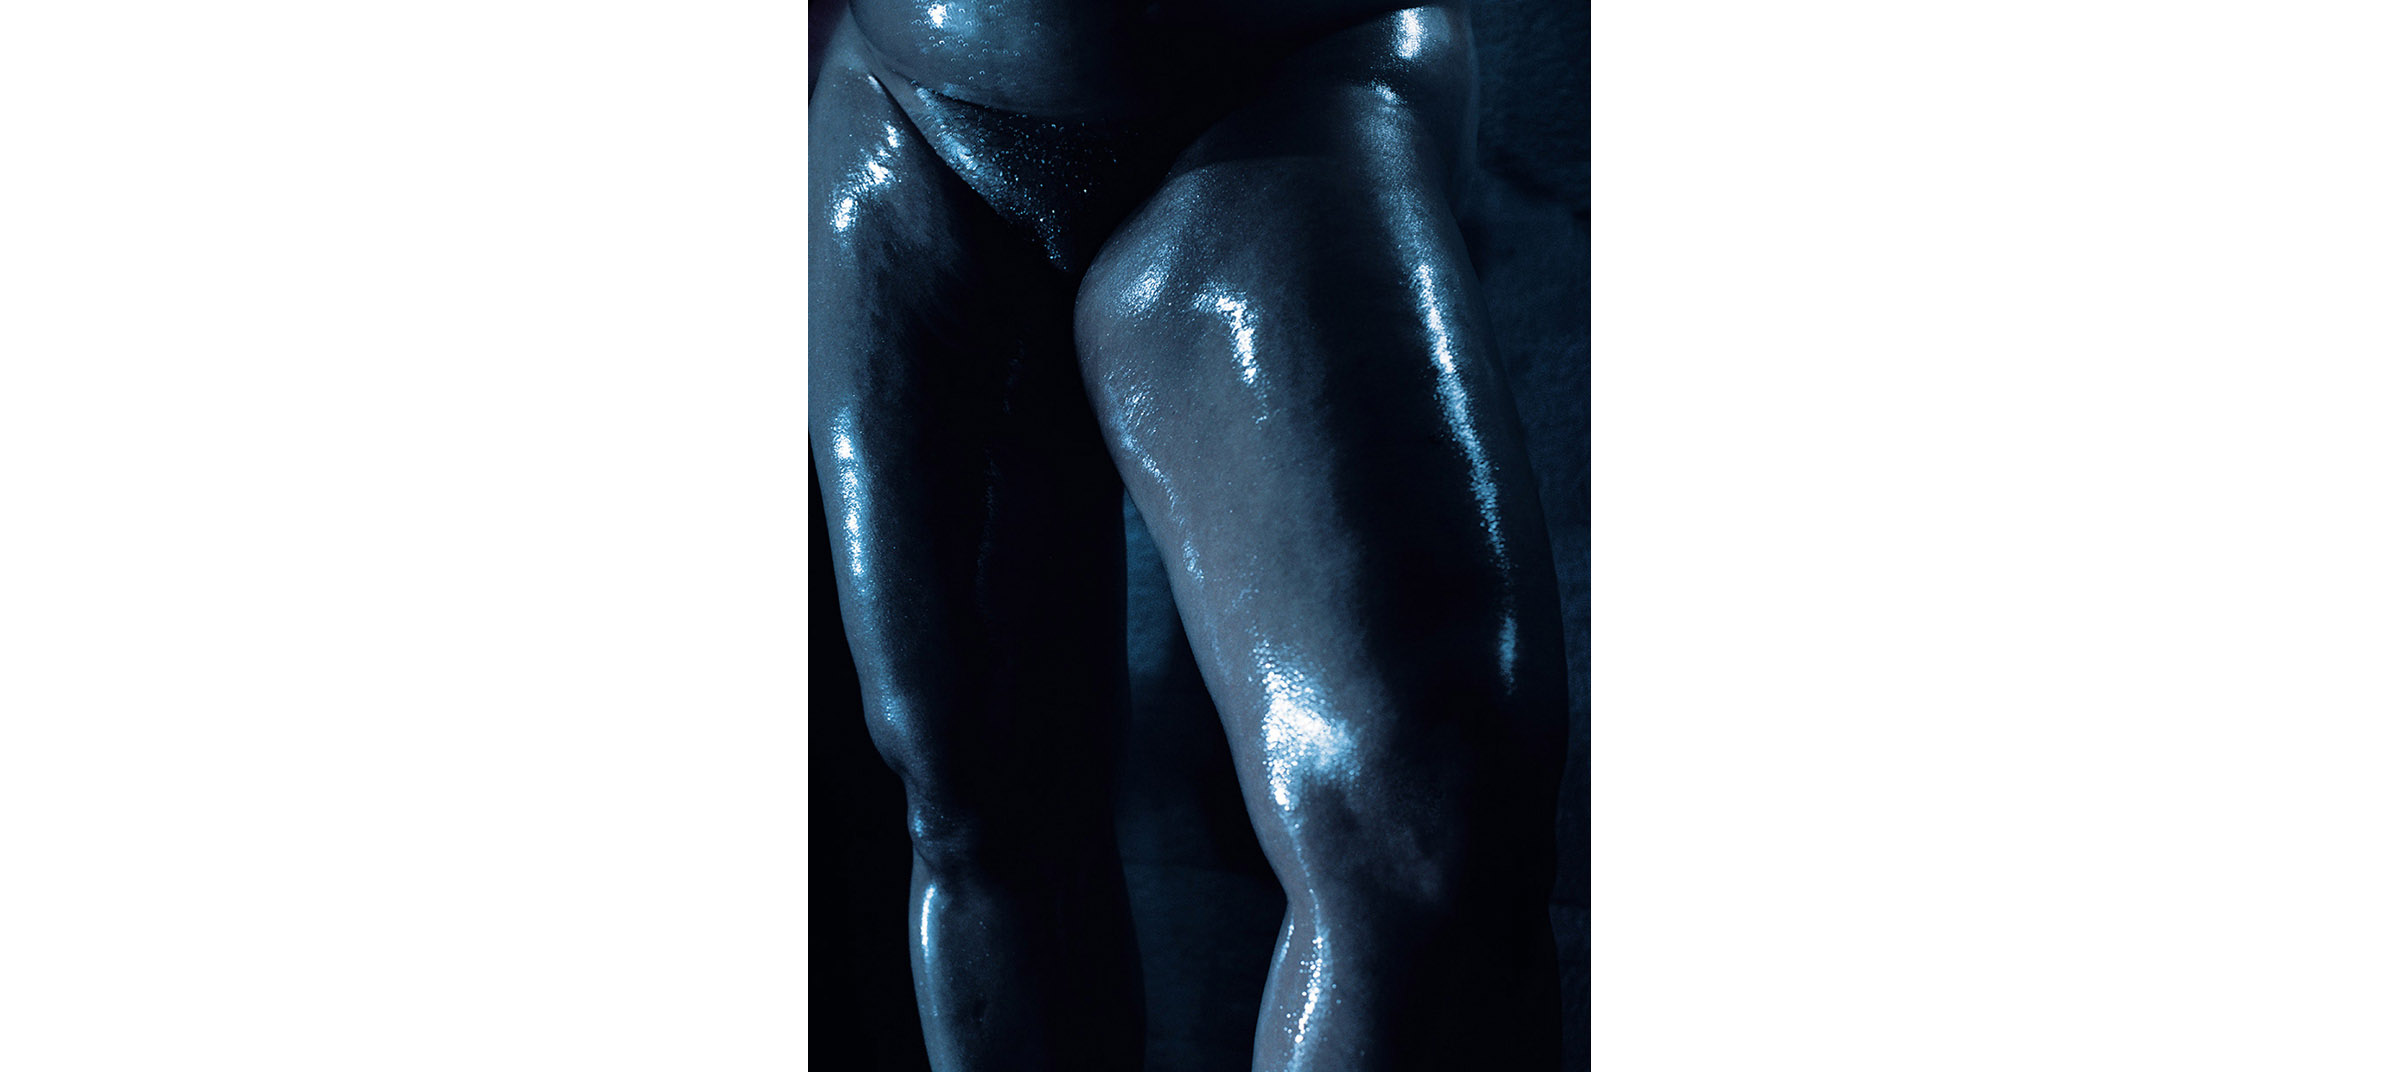   Blue Nudes  Untitled N°1, 2005 Tirage gélatino argentique, 144 x 104 cm | Gelatin silver print 56,59 x 40,94 inches  2/5 